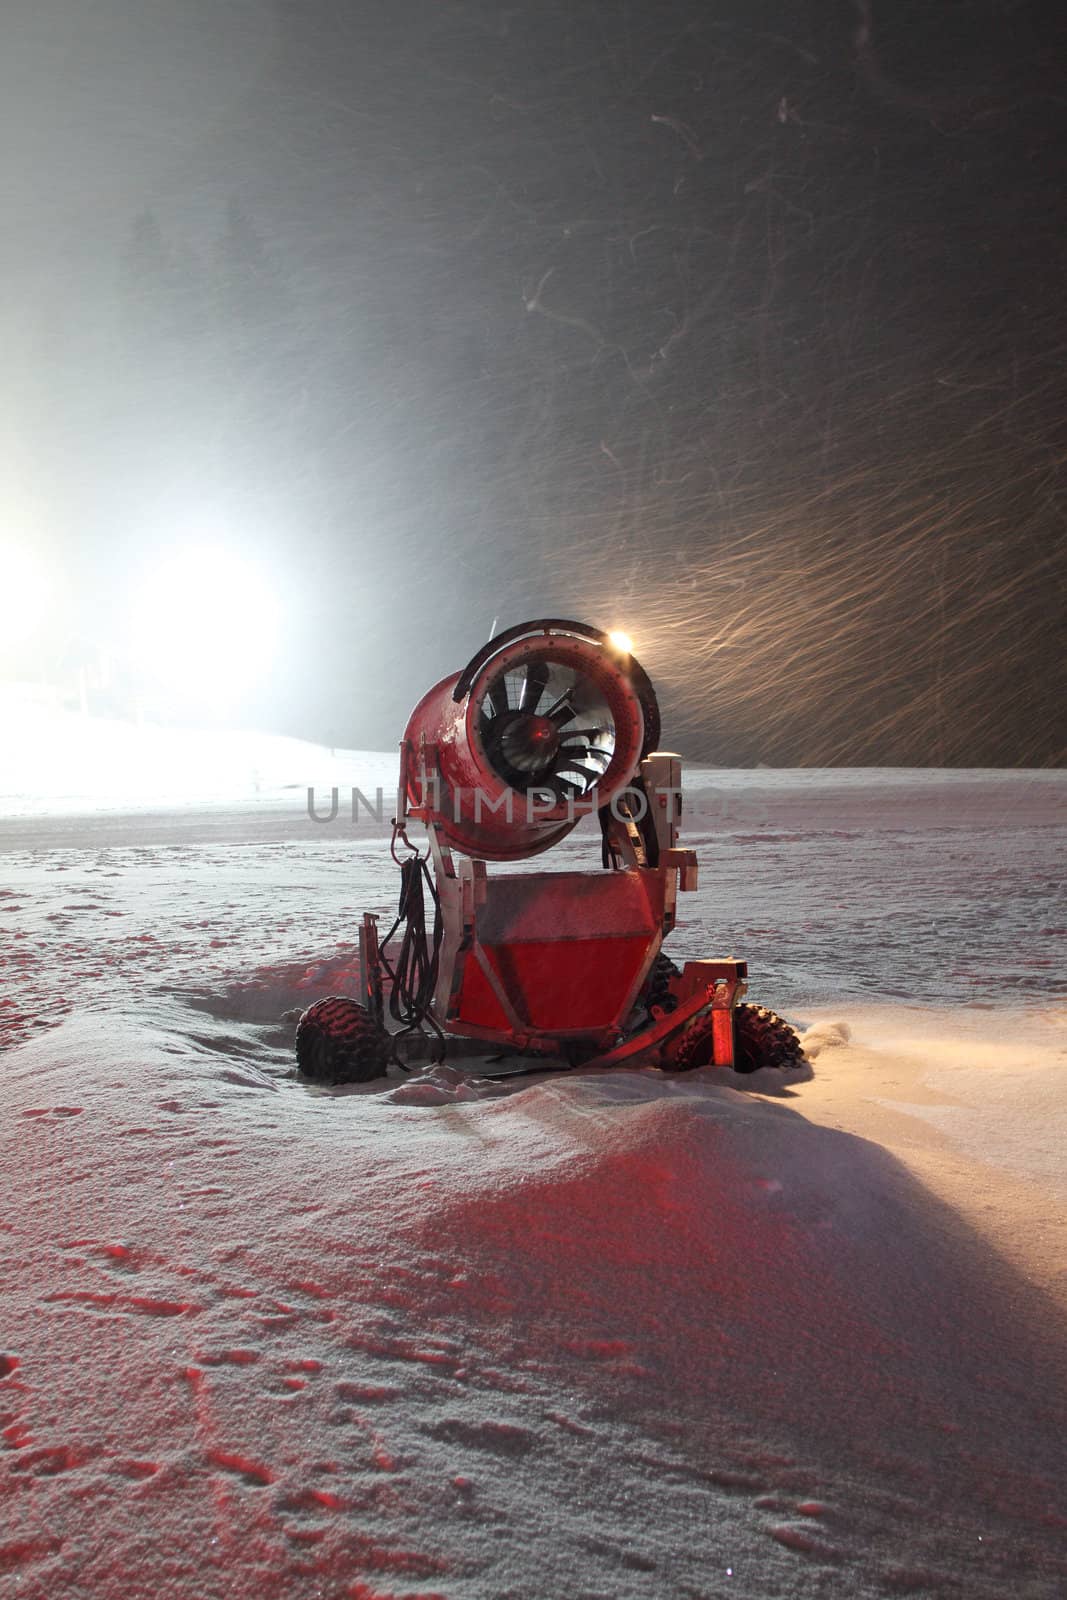 snow making machine  by alexkosev